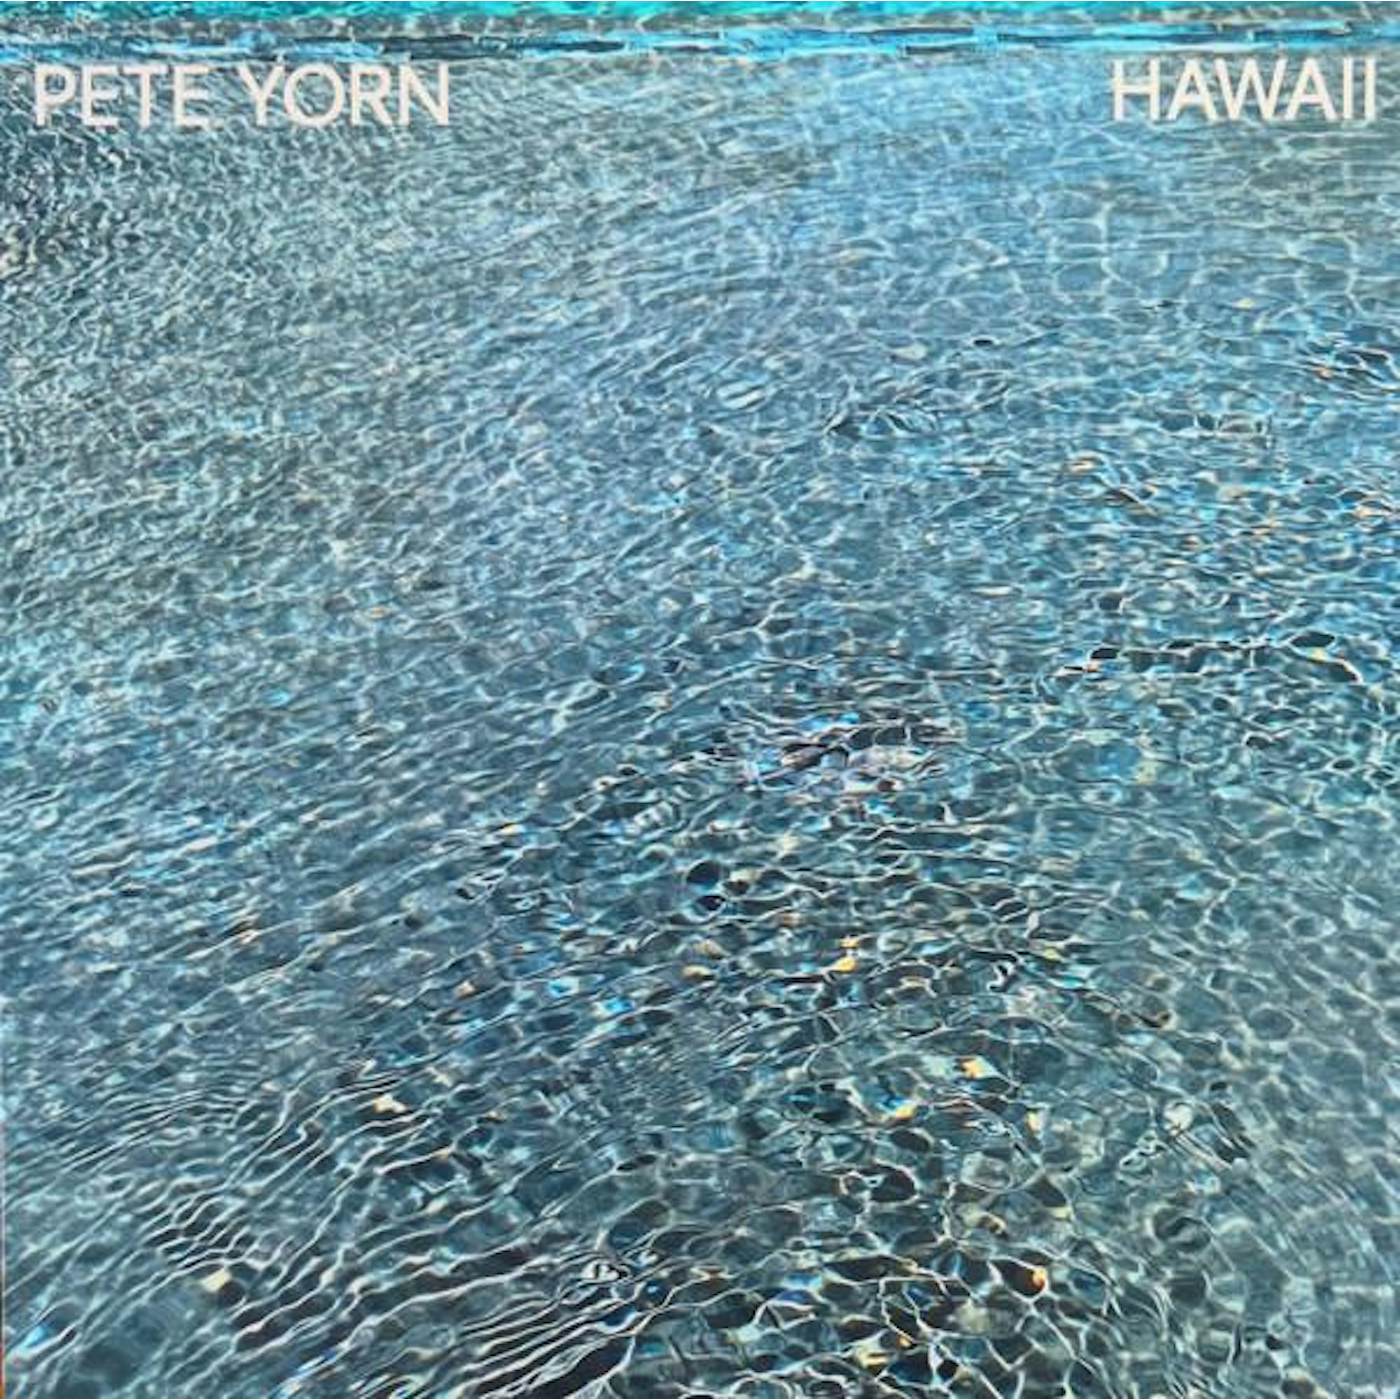 Pete Yorn Hawaii Vinyl Record